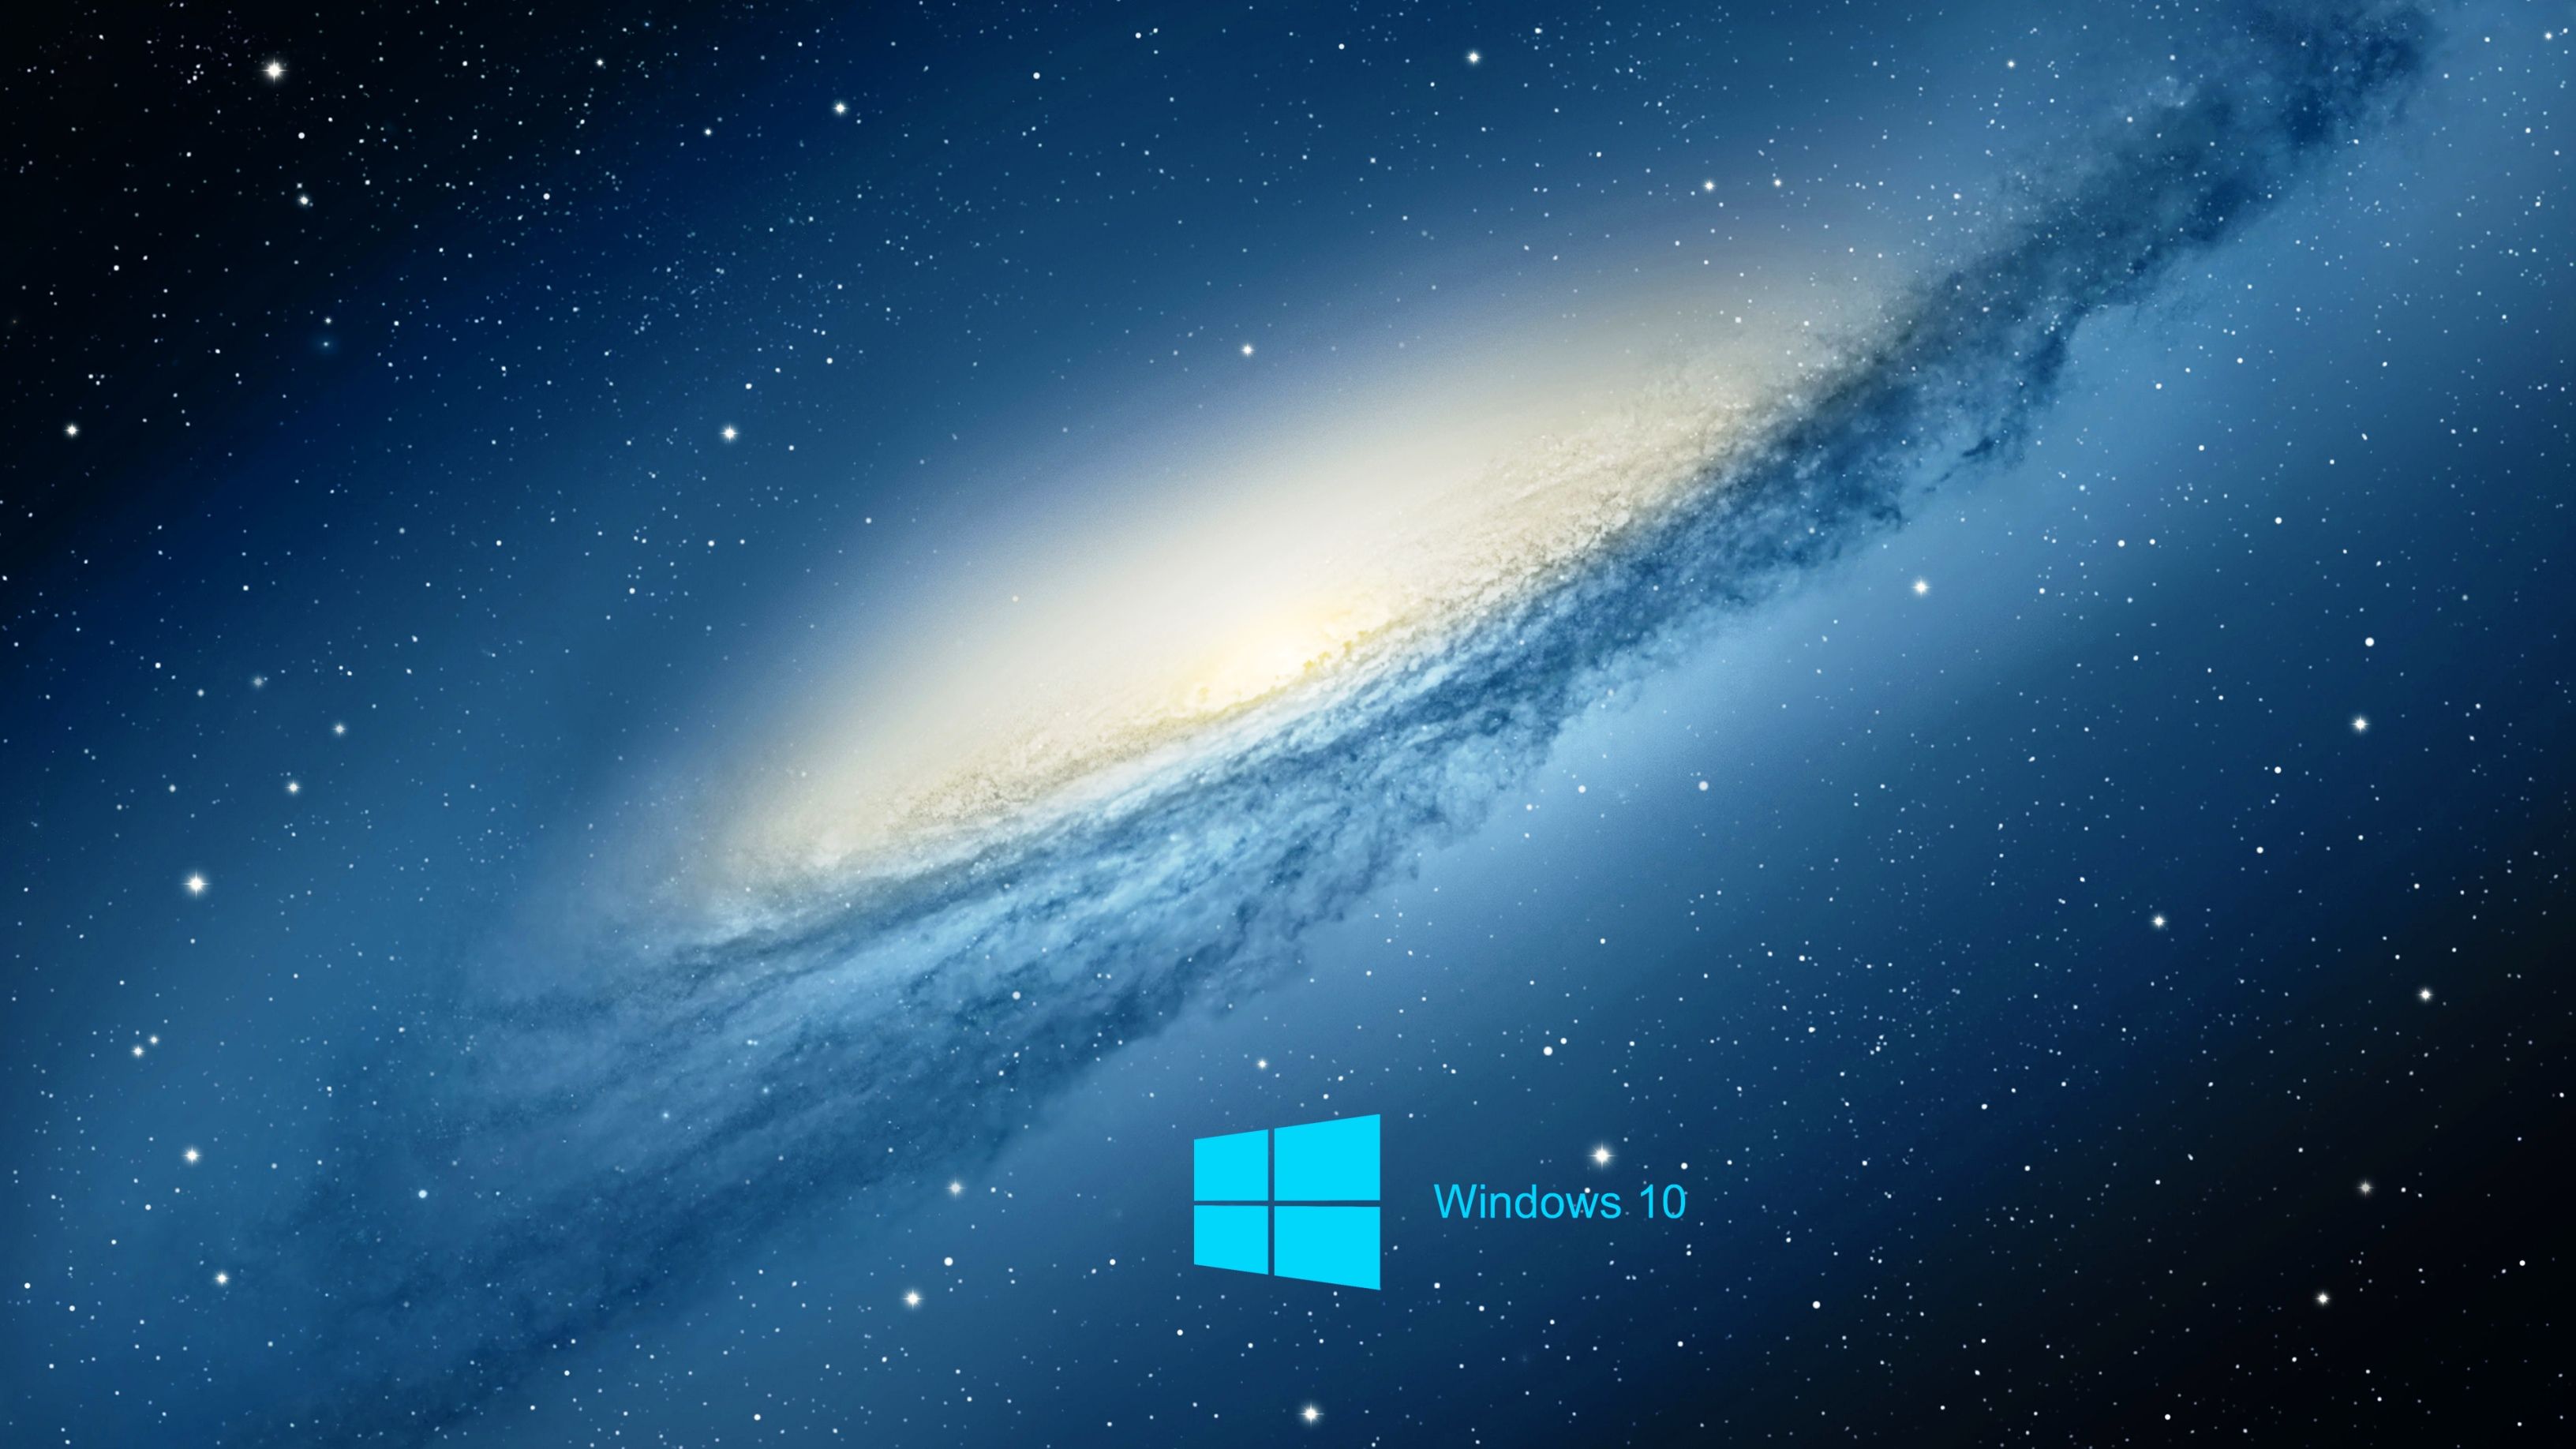 Windows 10 Ultra HD Wallpaper Computers in 2019 Os x mountain